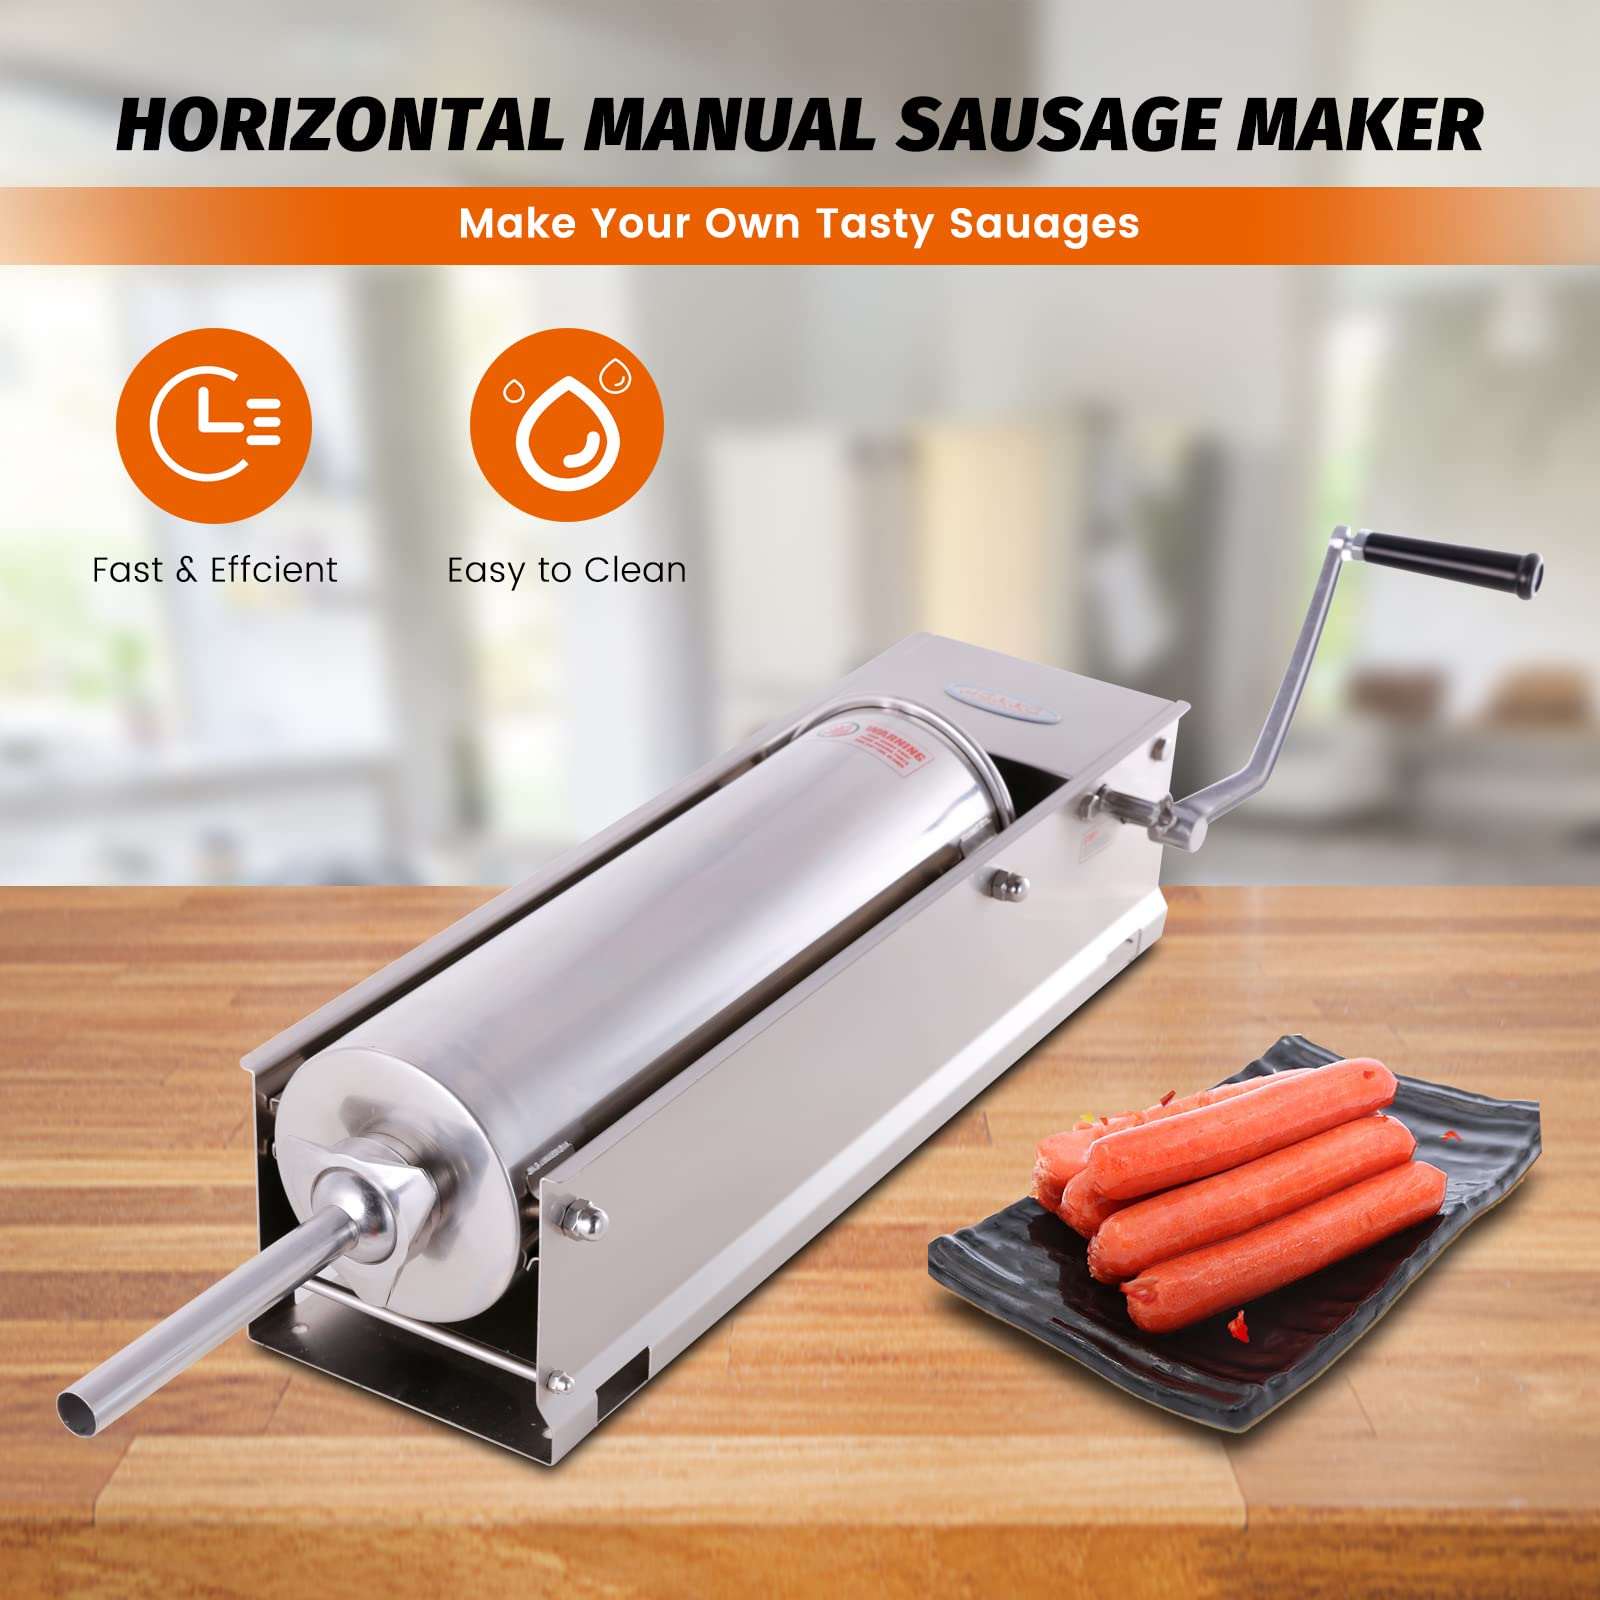 25 lb. Capacity Electric Sausage Stuffer - The Sausage Maker